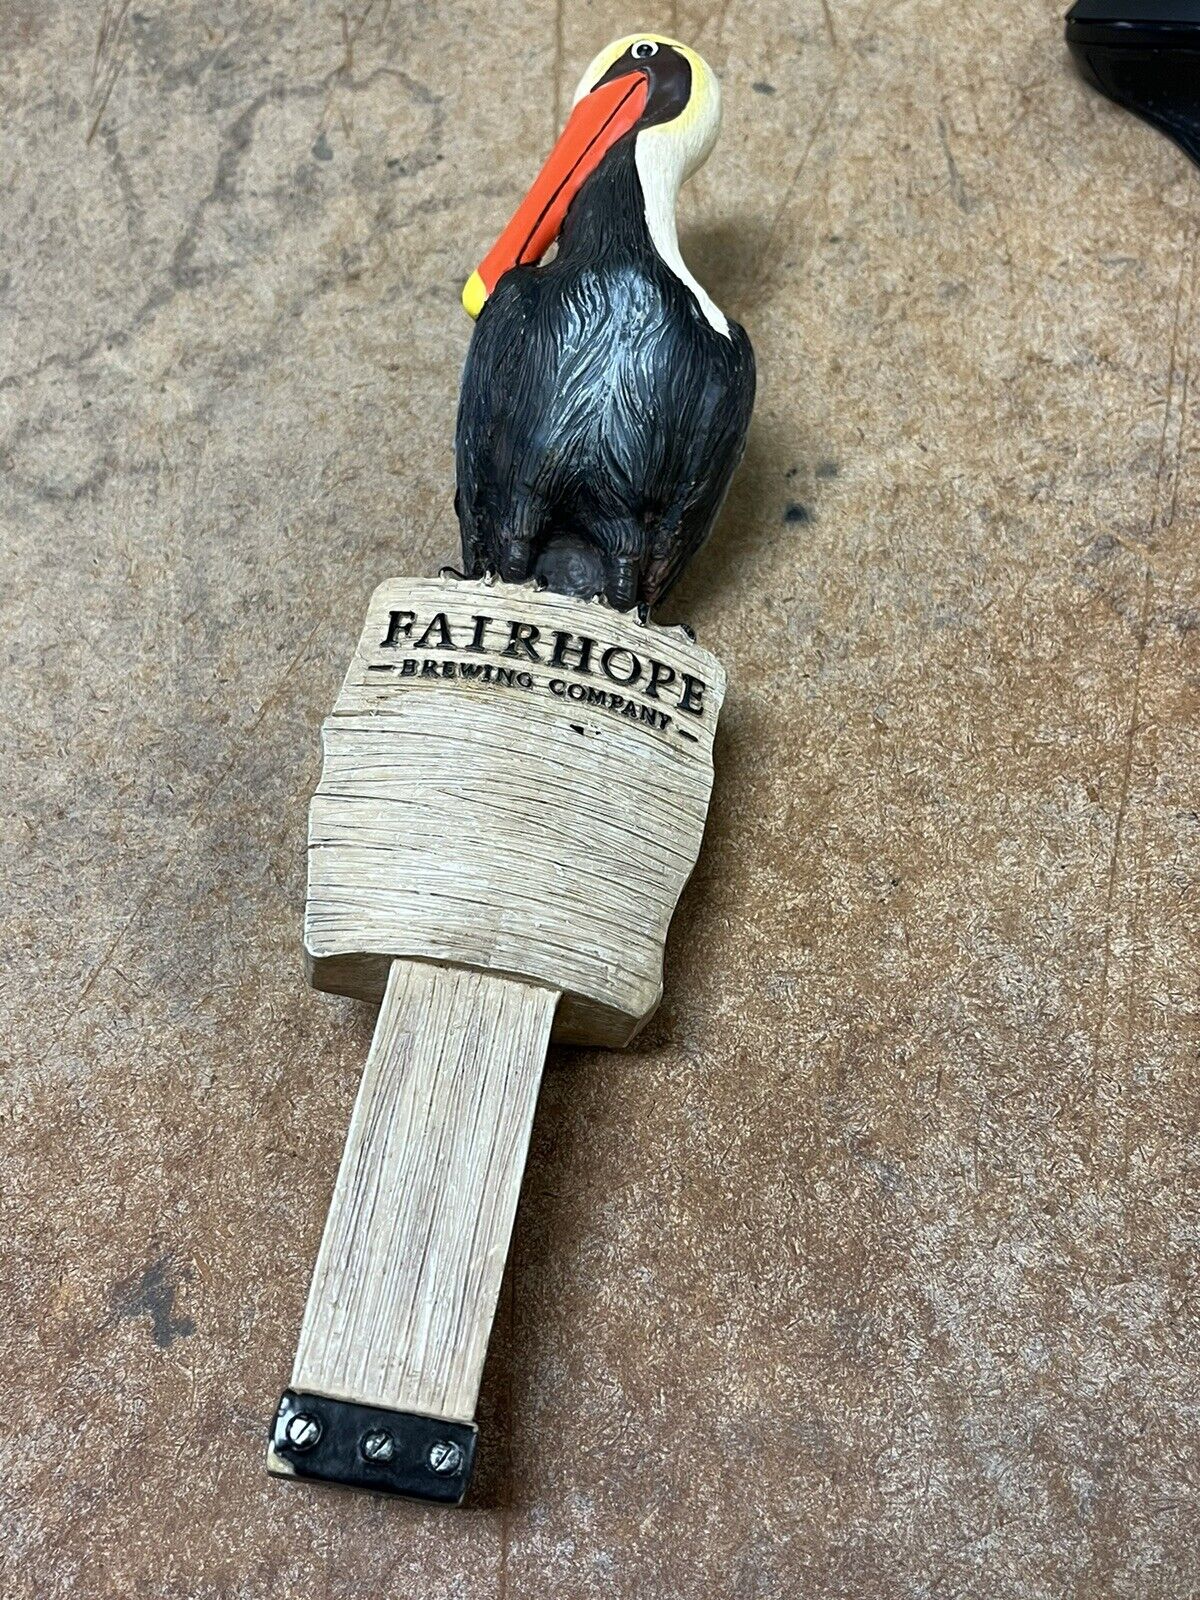 fairhope Brewing Co. Pelican ￼beer tap handle